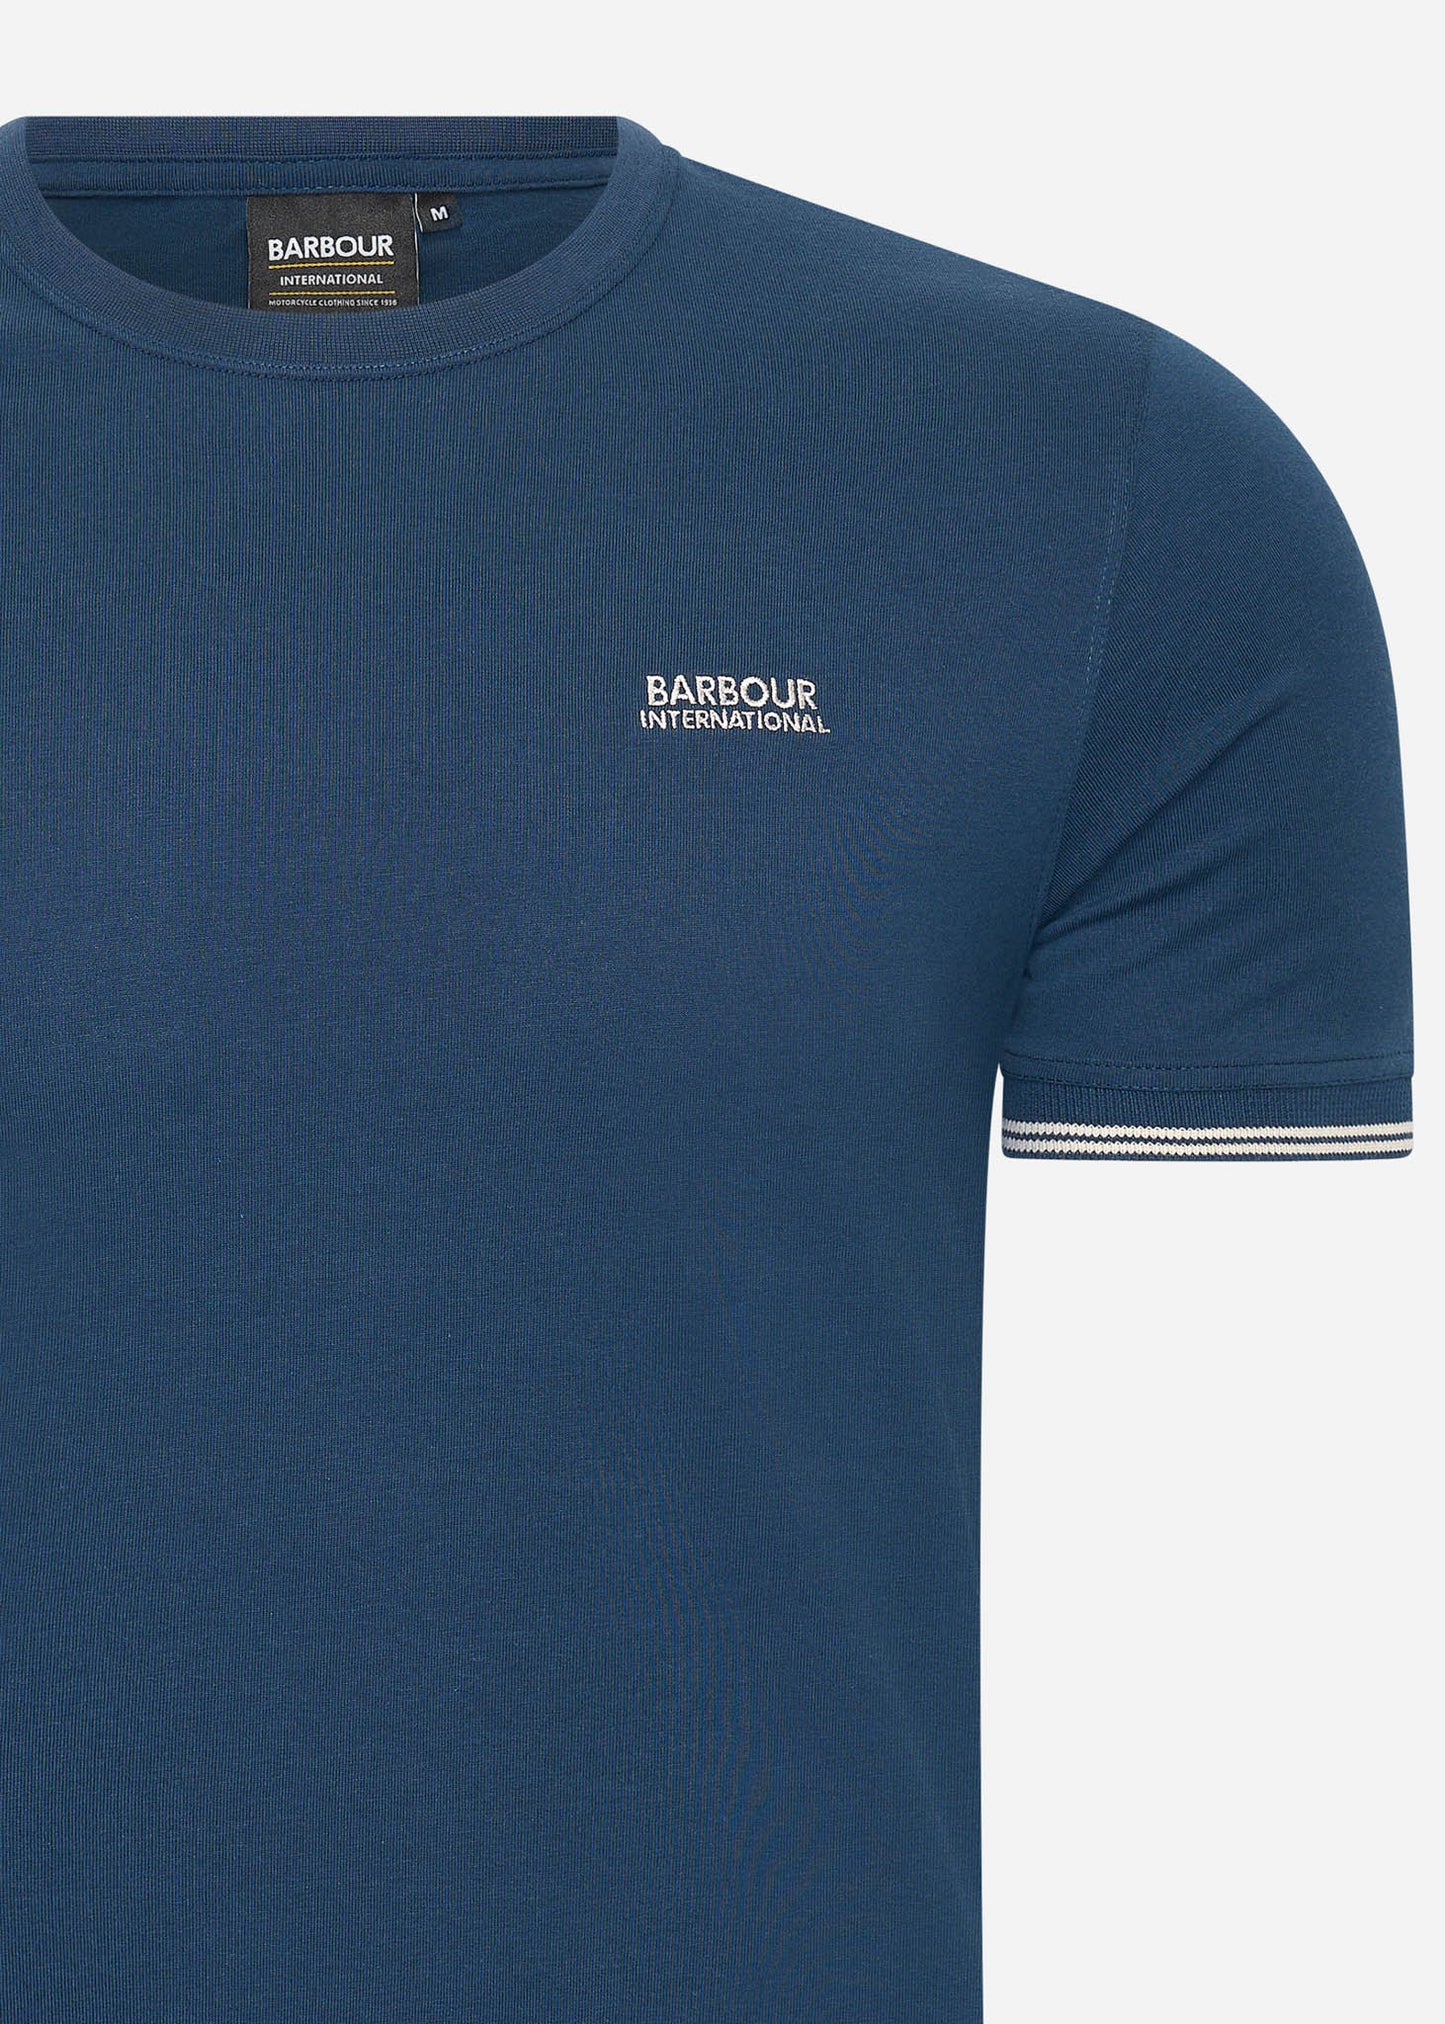 Barbour International T-shirts  Philip tipped cuff tee - moonlit ocean 